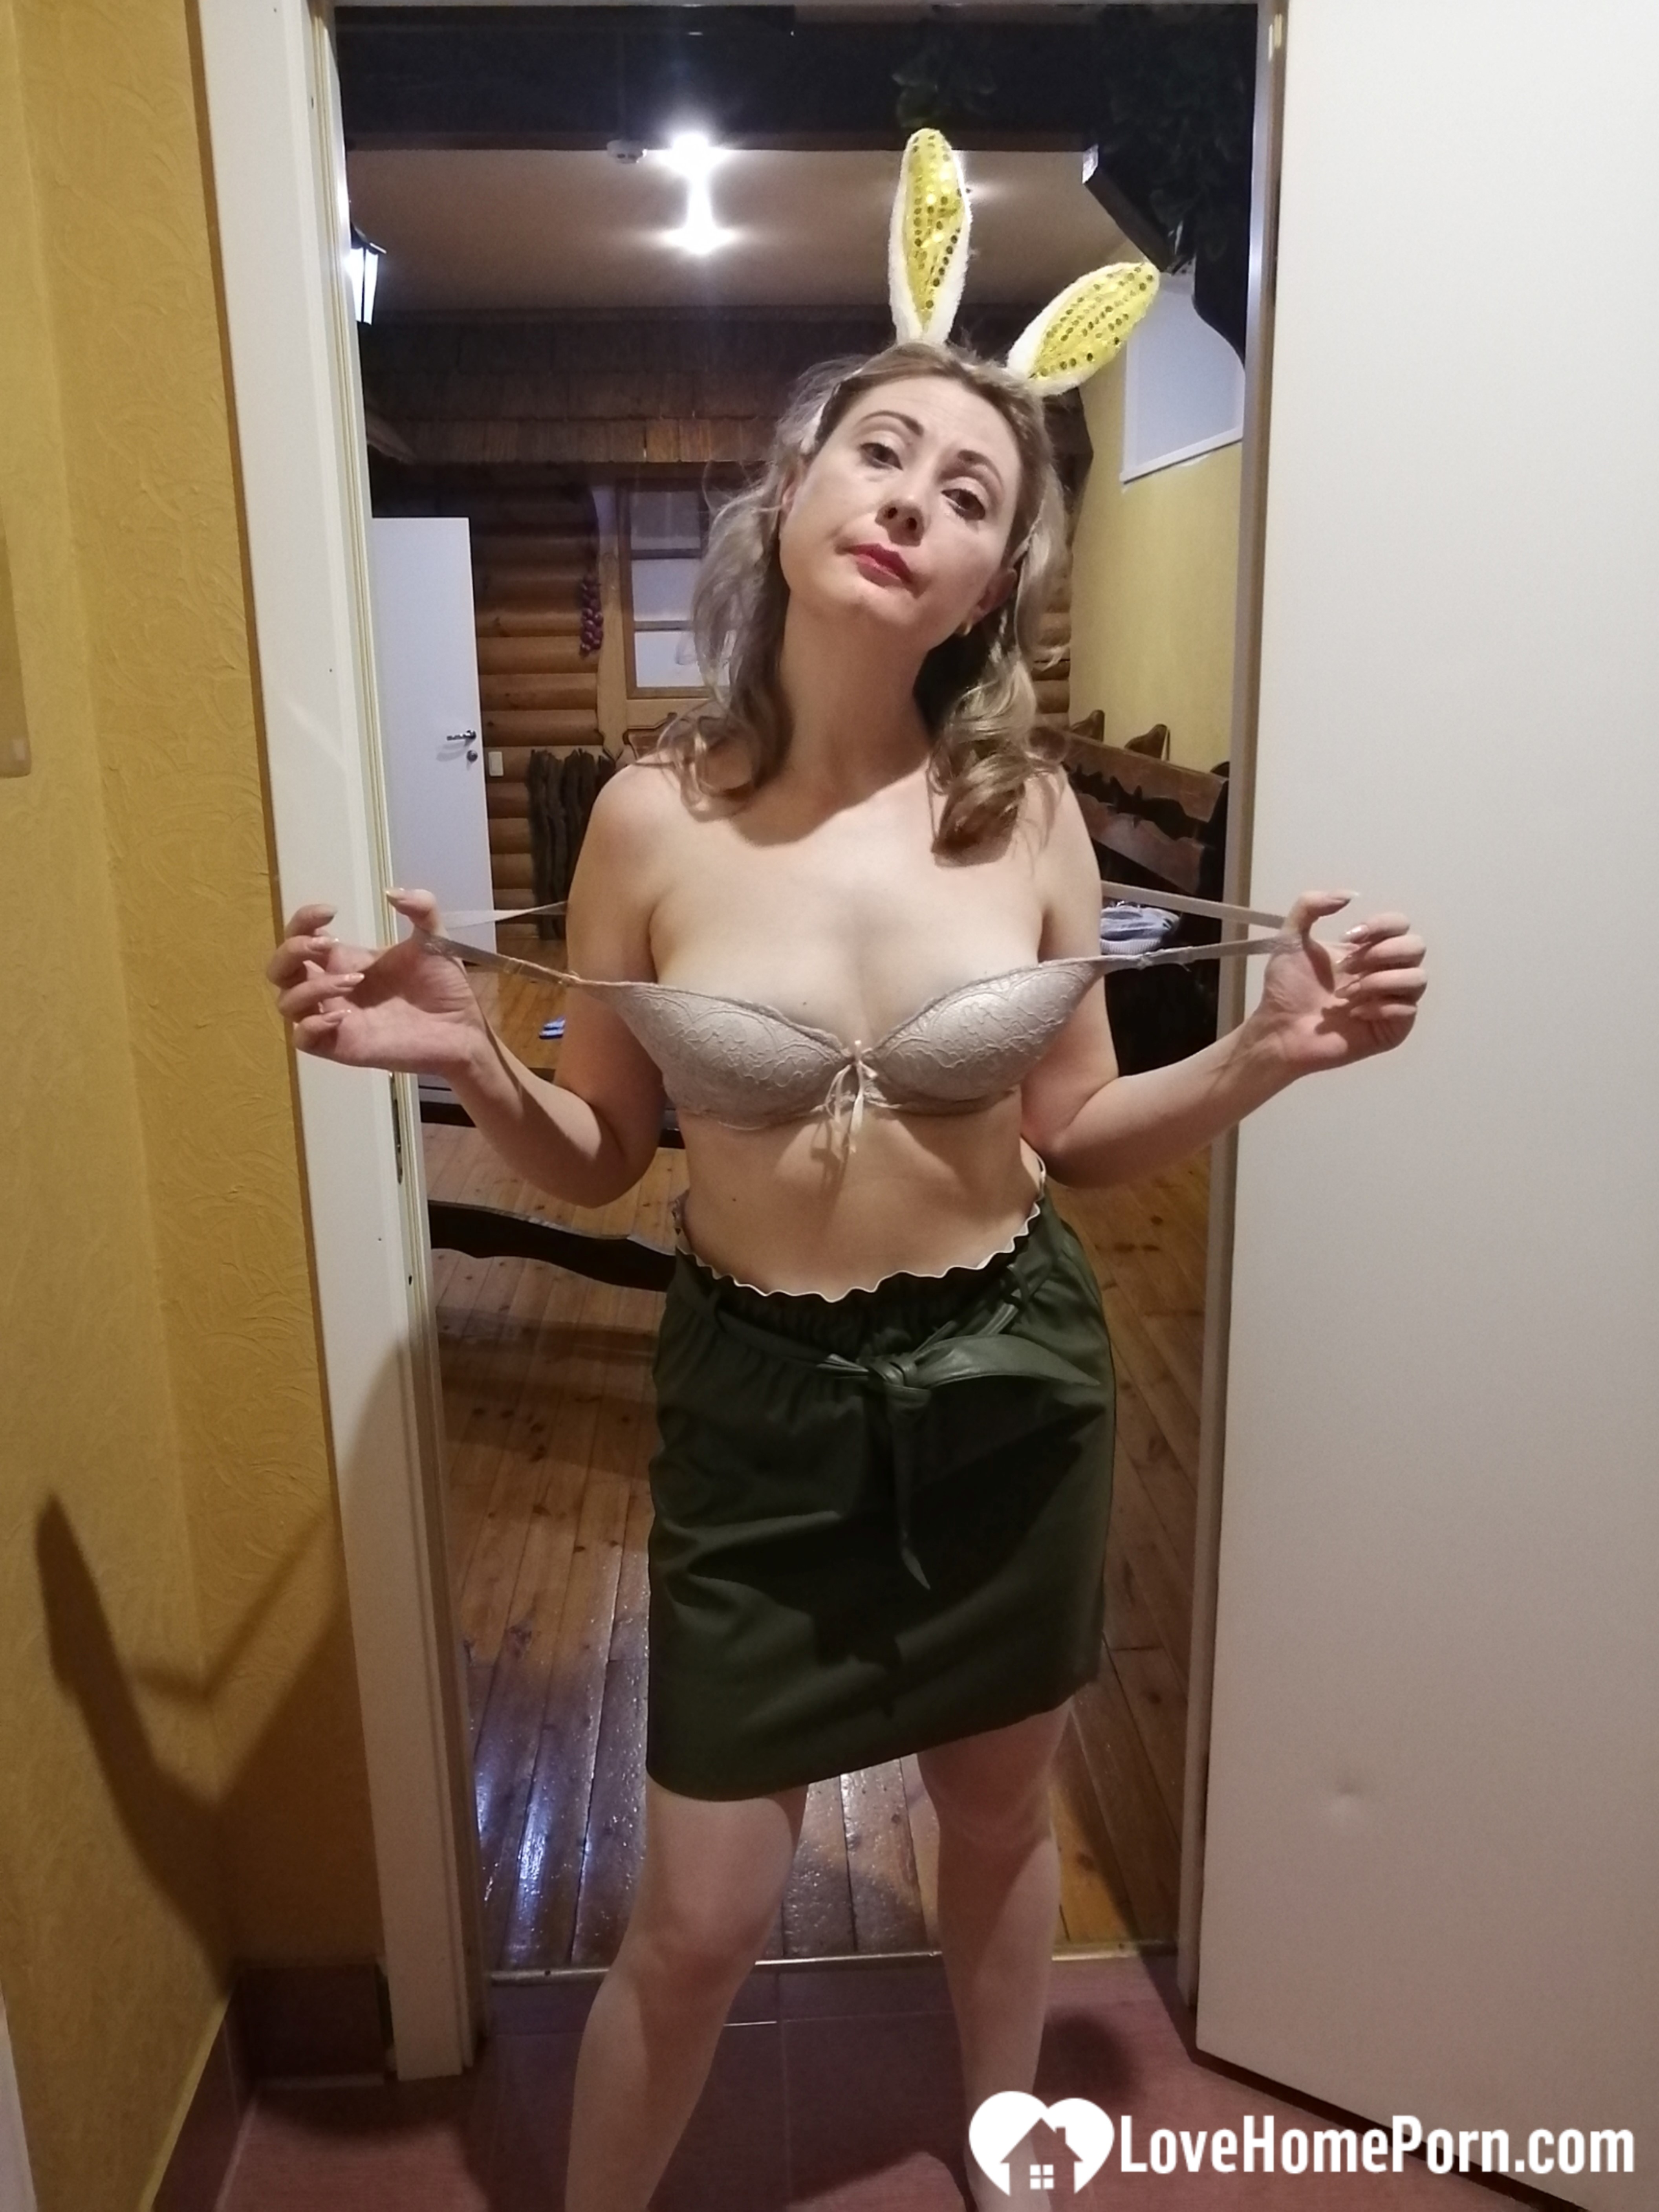 Smoking beauty posing with cute bunny ears